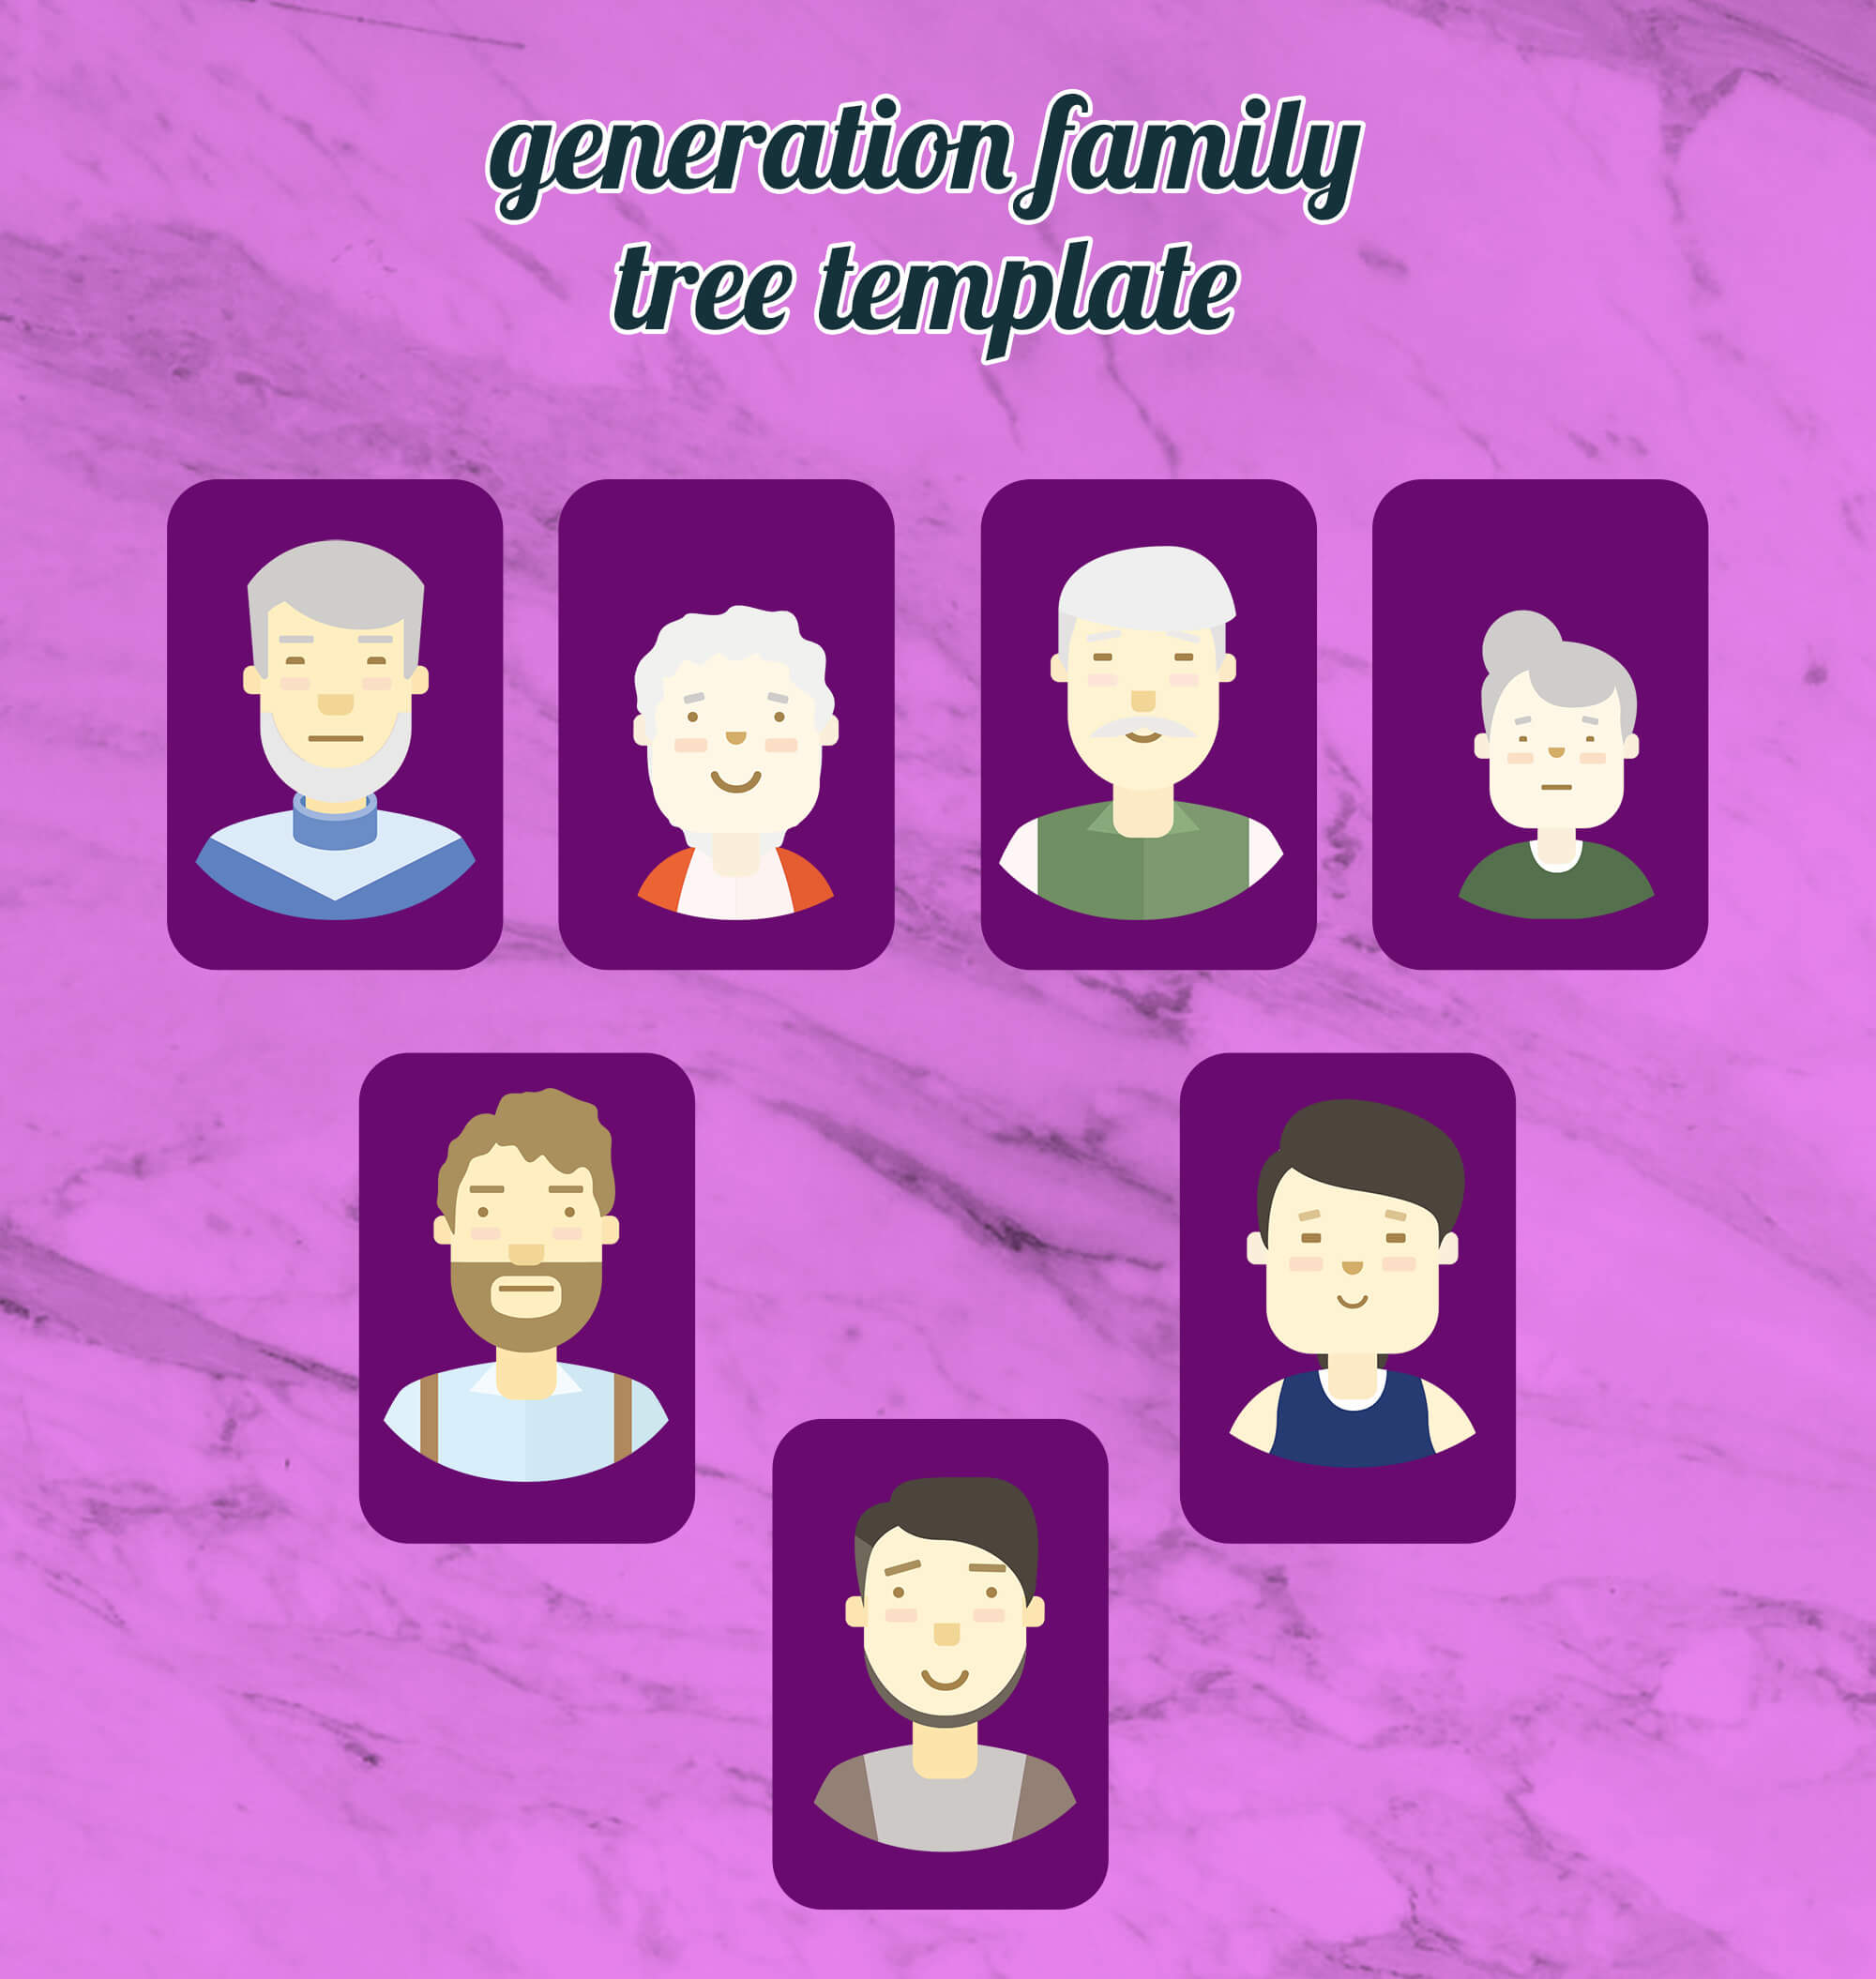 generation family tree template Free PSD Templates Ideas 1 1